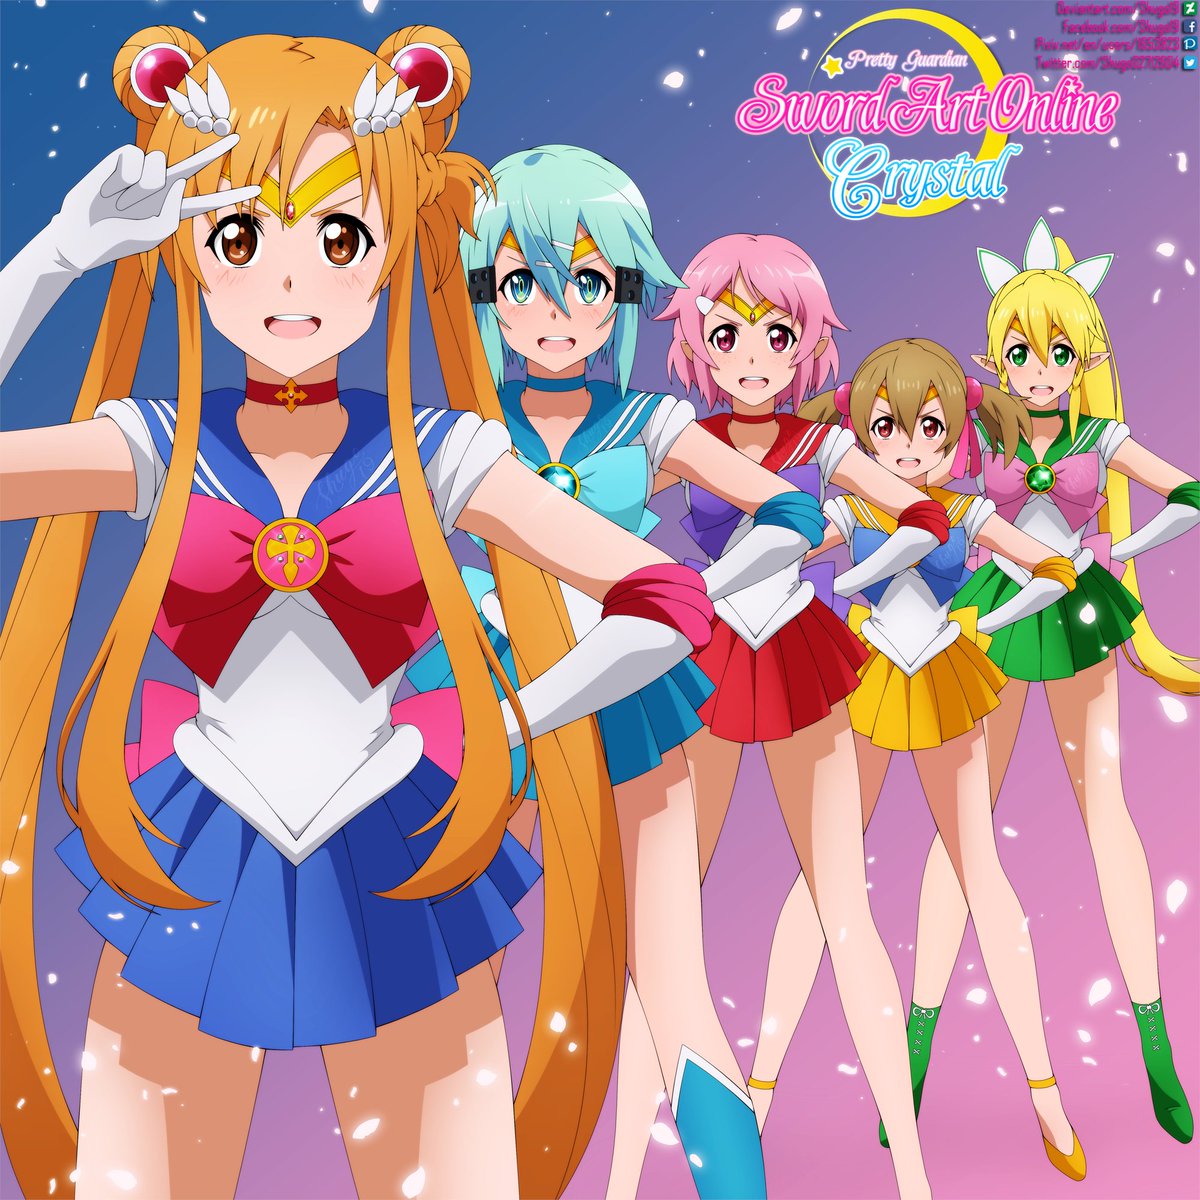 Crossover: #SailorMoon  / #SwordArtOnline
Character: #Asuna #Yuuki (#SailorMoon), #Sinon (#SailorMercury), #Lizbeth (#SailorMars), #Silica (#SailorVenus), #Leafa (#SailorJupiter)

- FanArt! -
By Shugo19
@ deviantart.com/Shugo19
@ pixiv.net/en/users/16538…
@ facebook.com/Shugo19